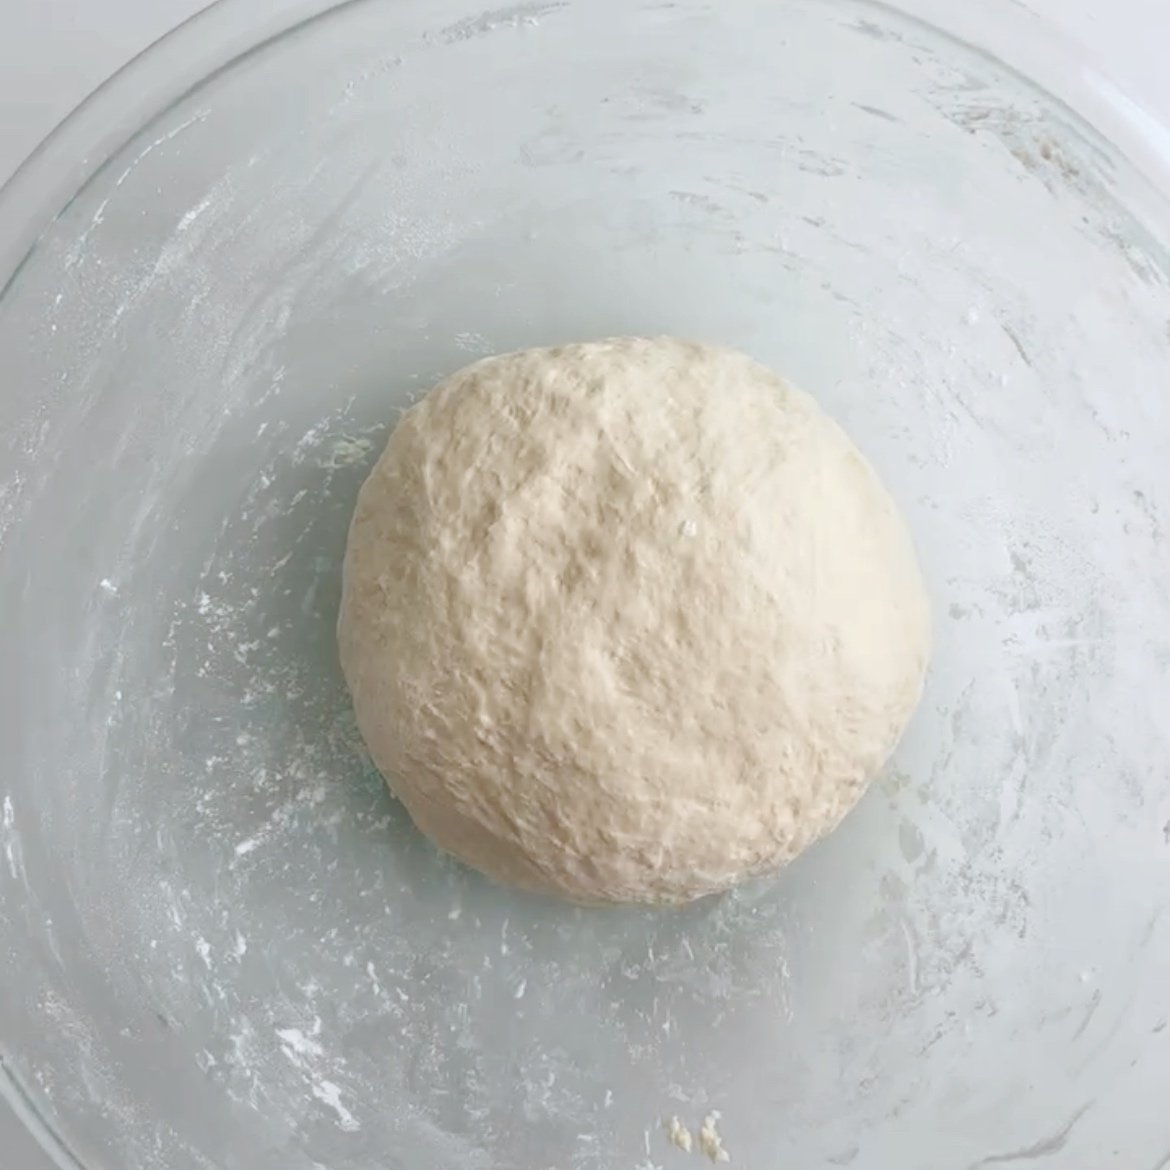 sada roti dough resting in a bowl